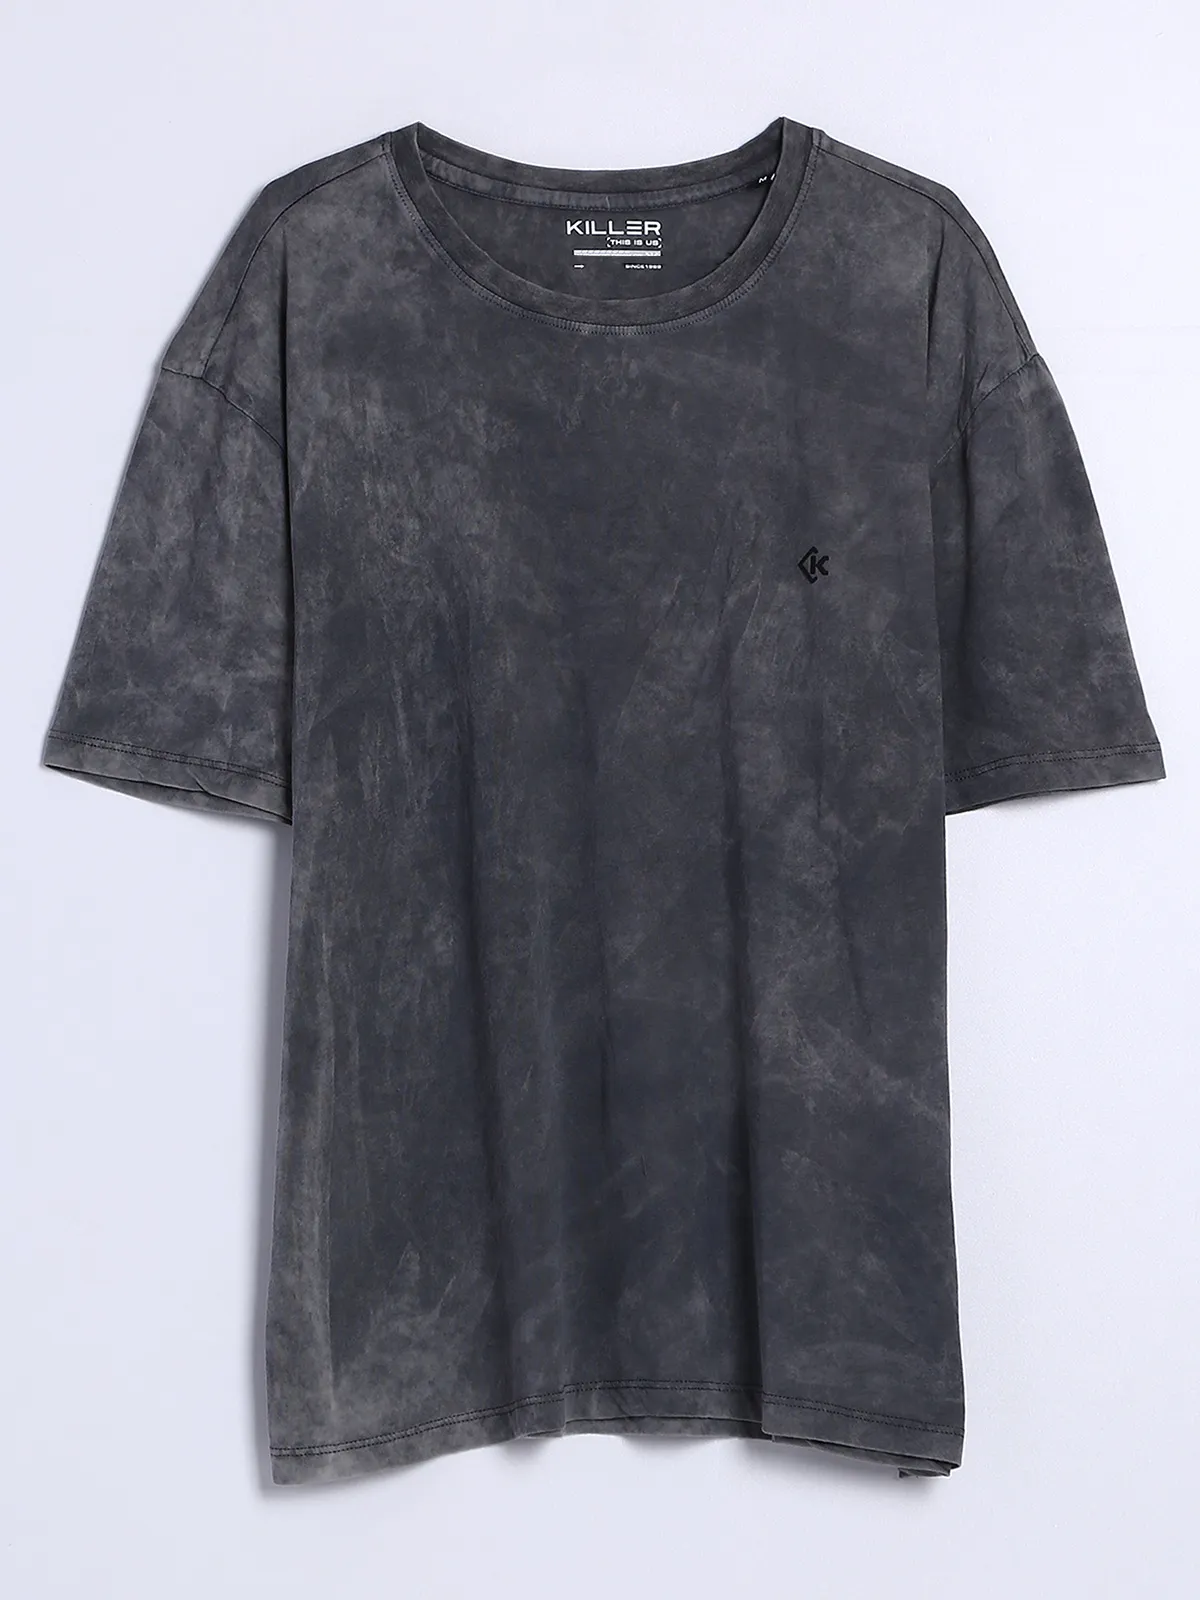 Killer charcoal grey half sleeves t shirt